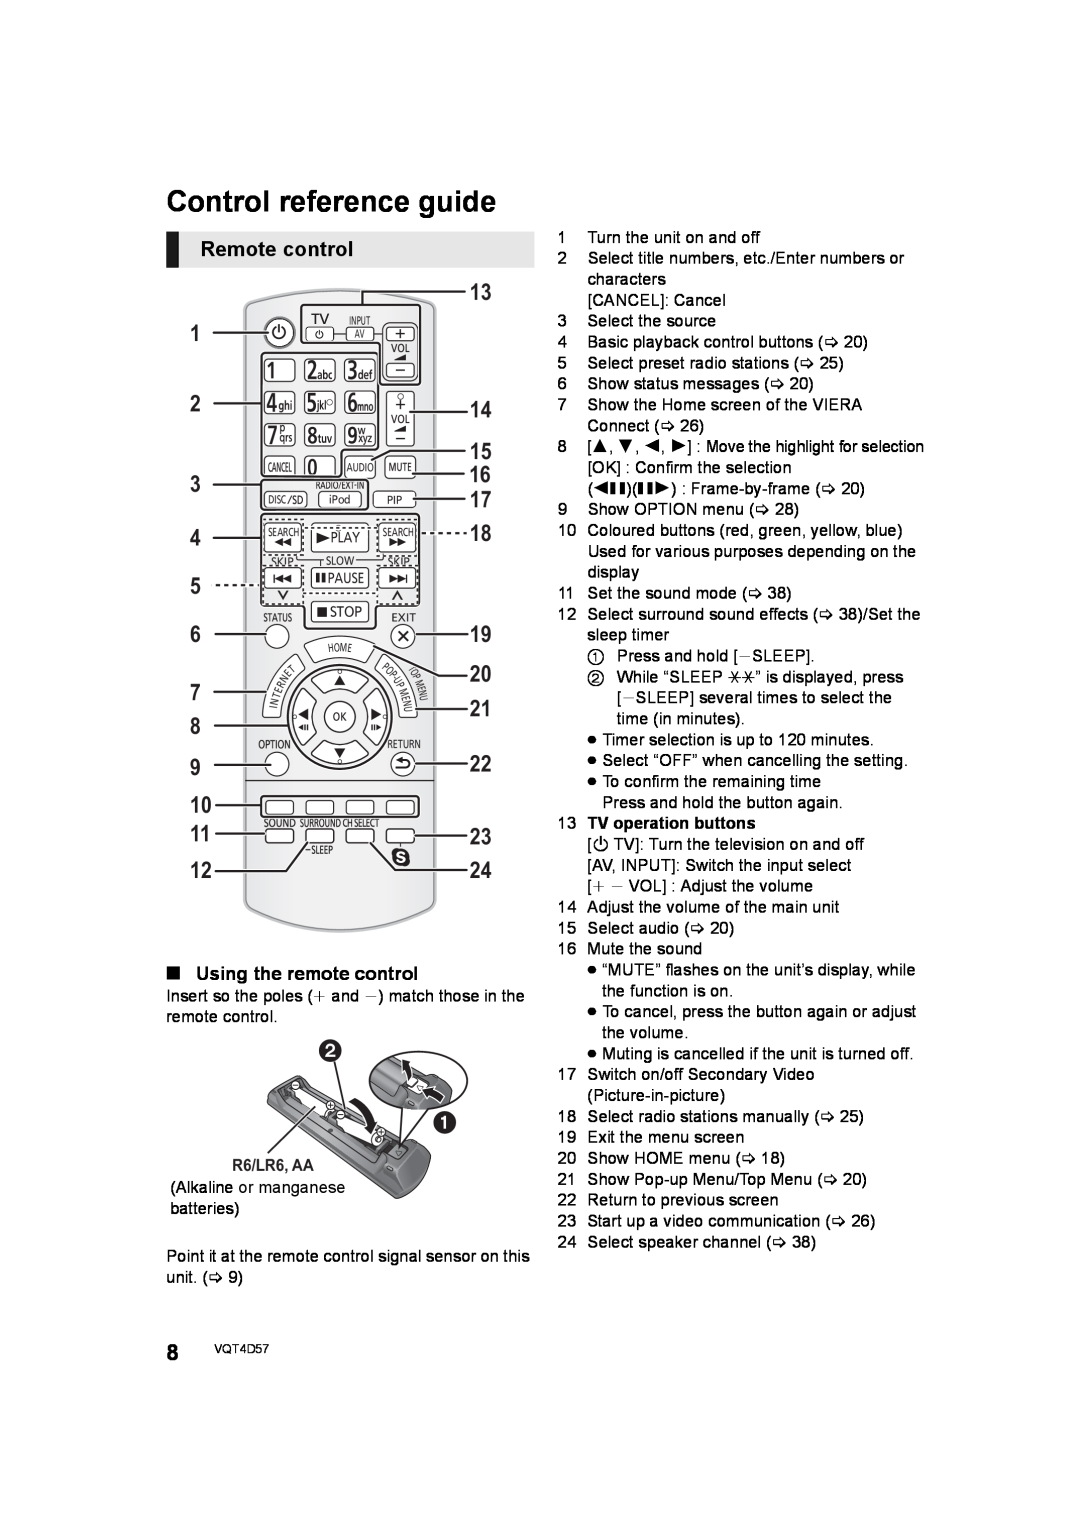 Panasonic SC-BTT190 manual Control reference guide 